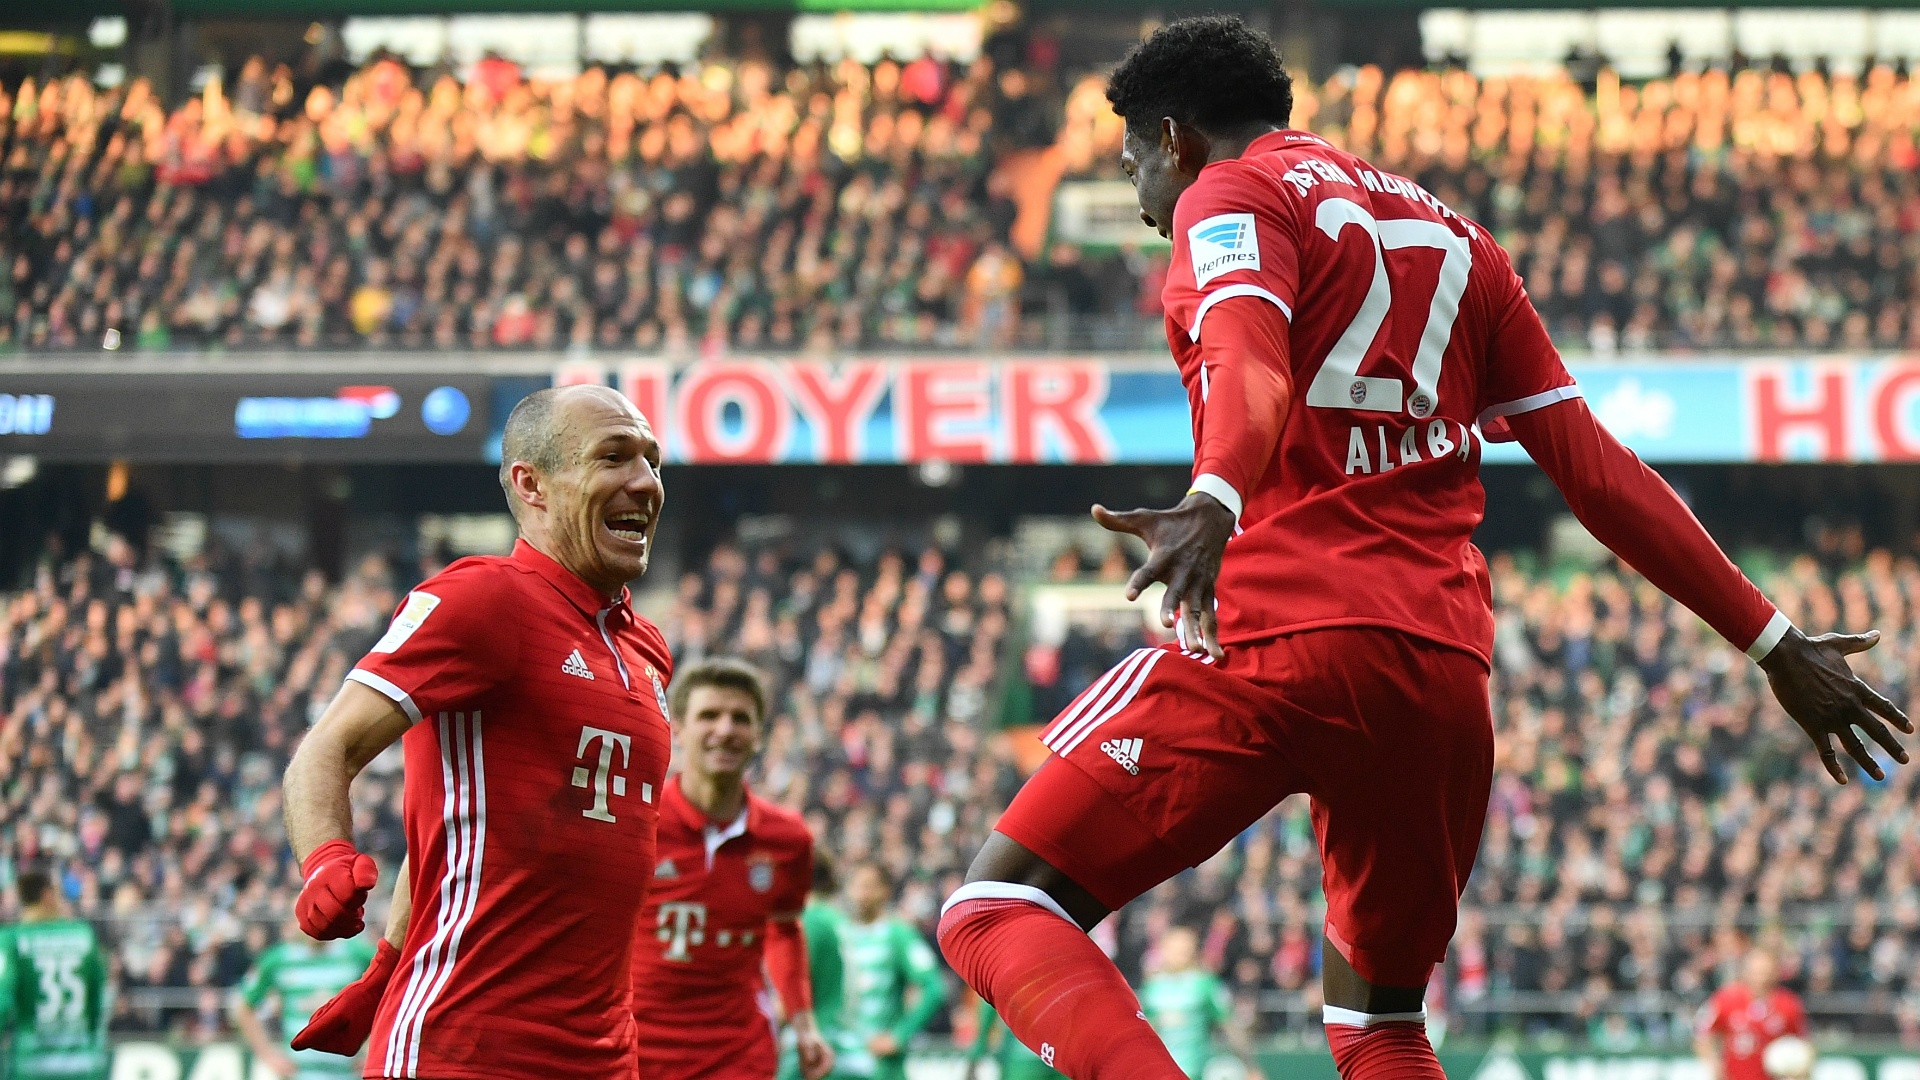 Bayern's Robben and Alaba celebrating. Goal